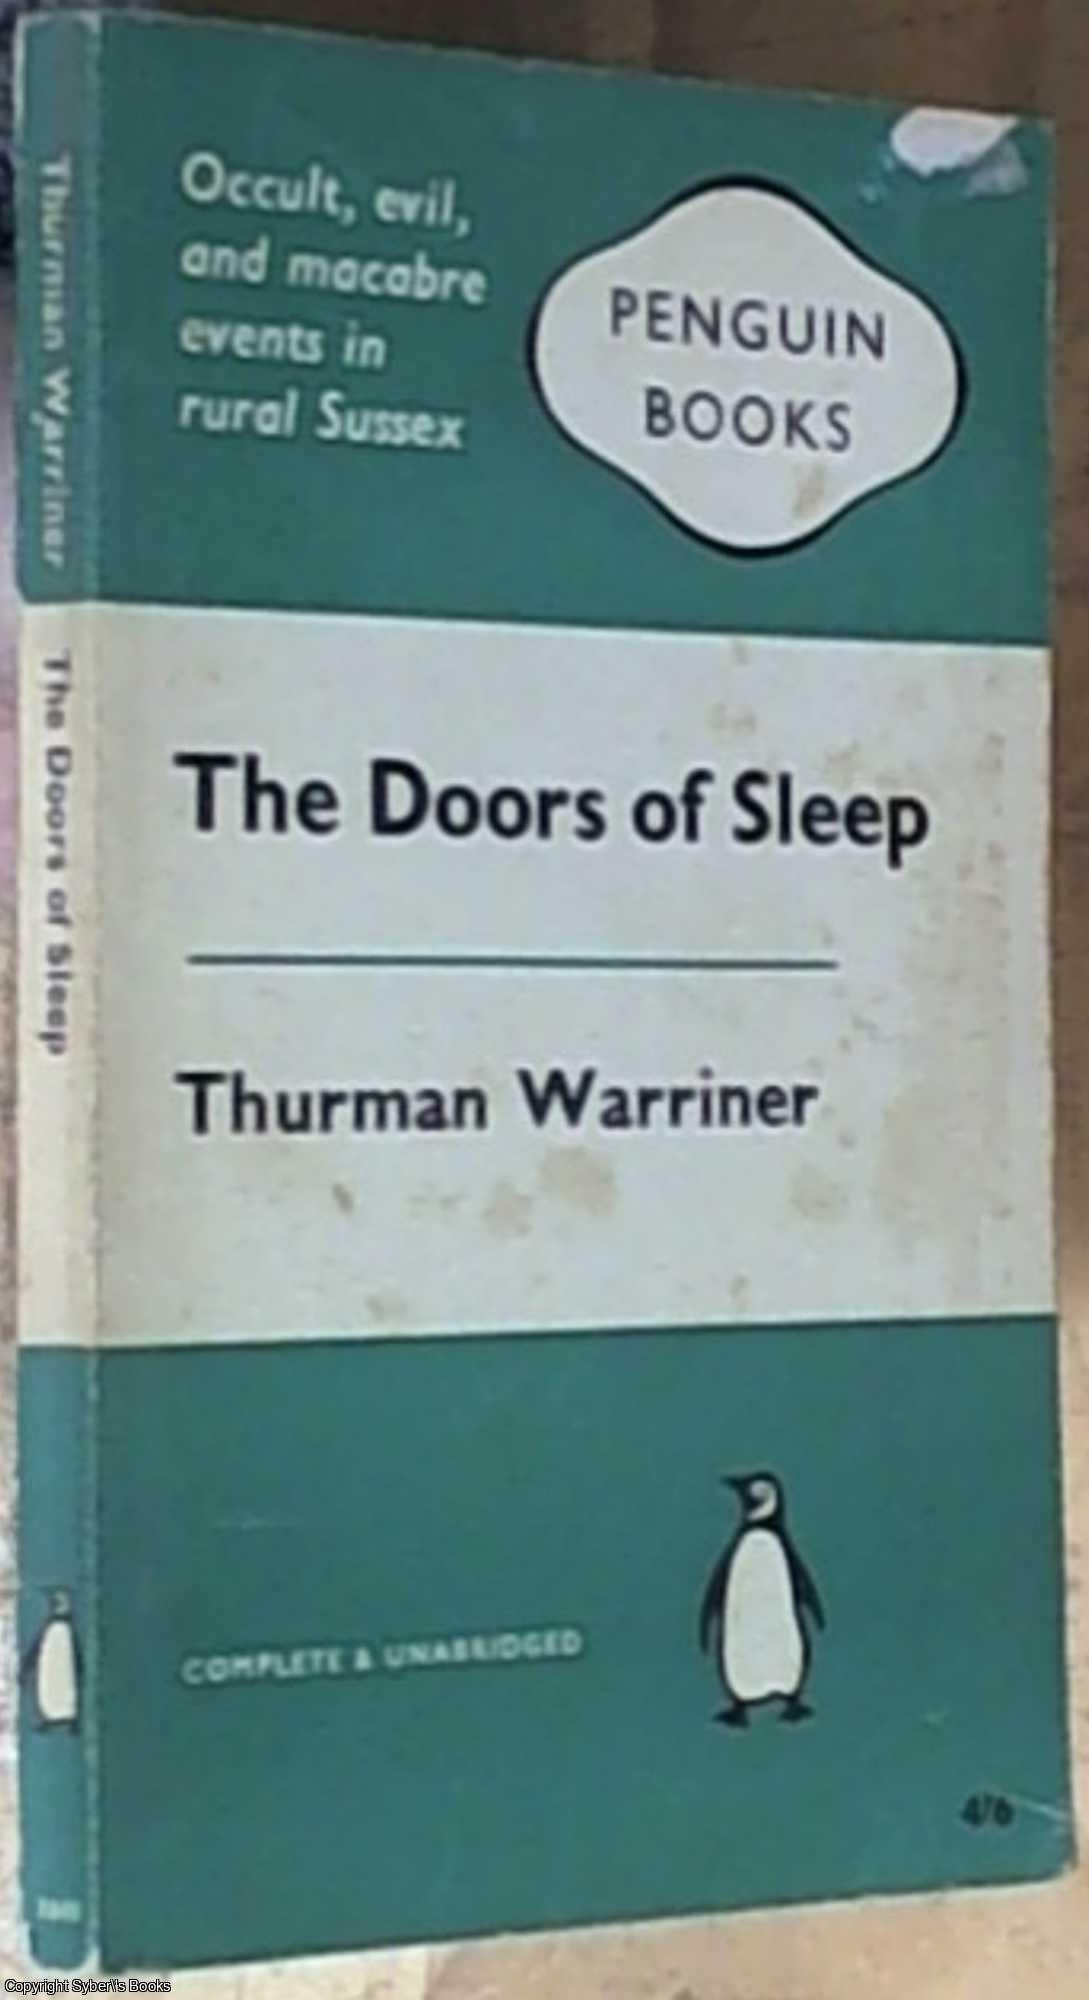 Warriner, Thurman - The Doors of Sleep (Penguin Crime)